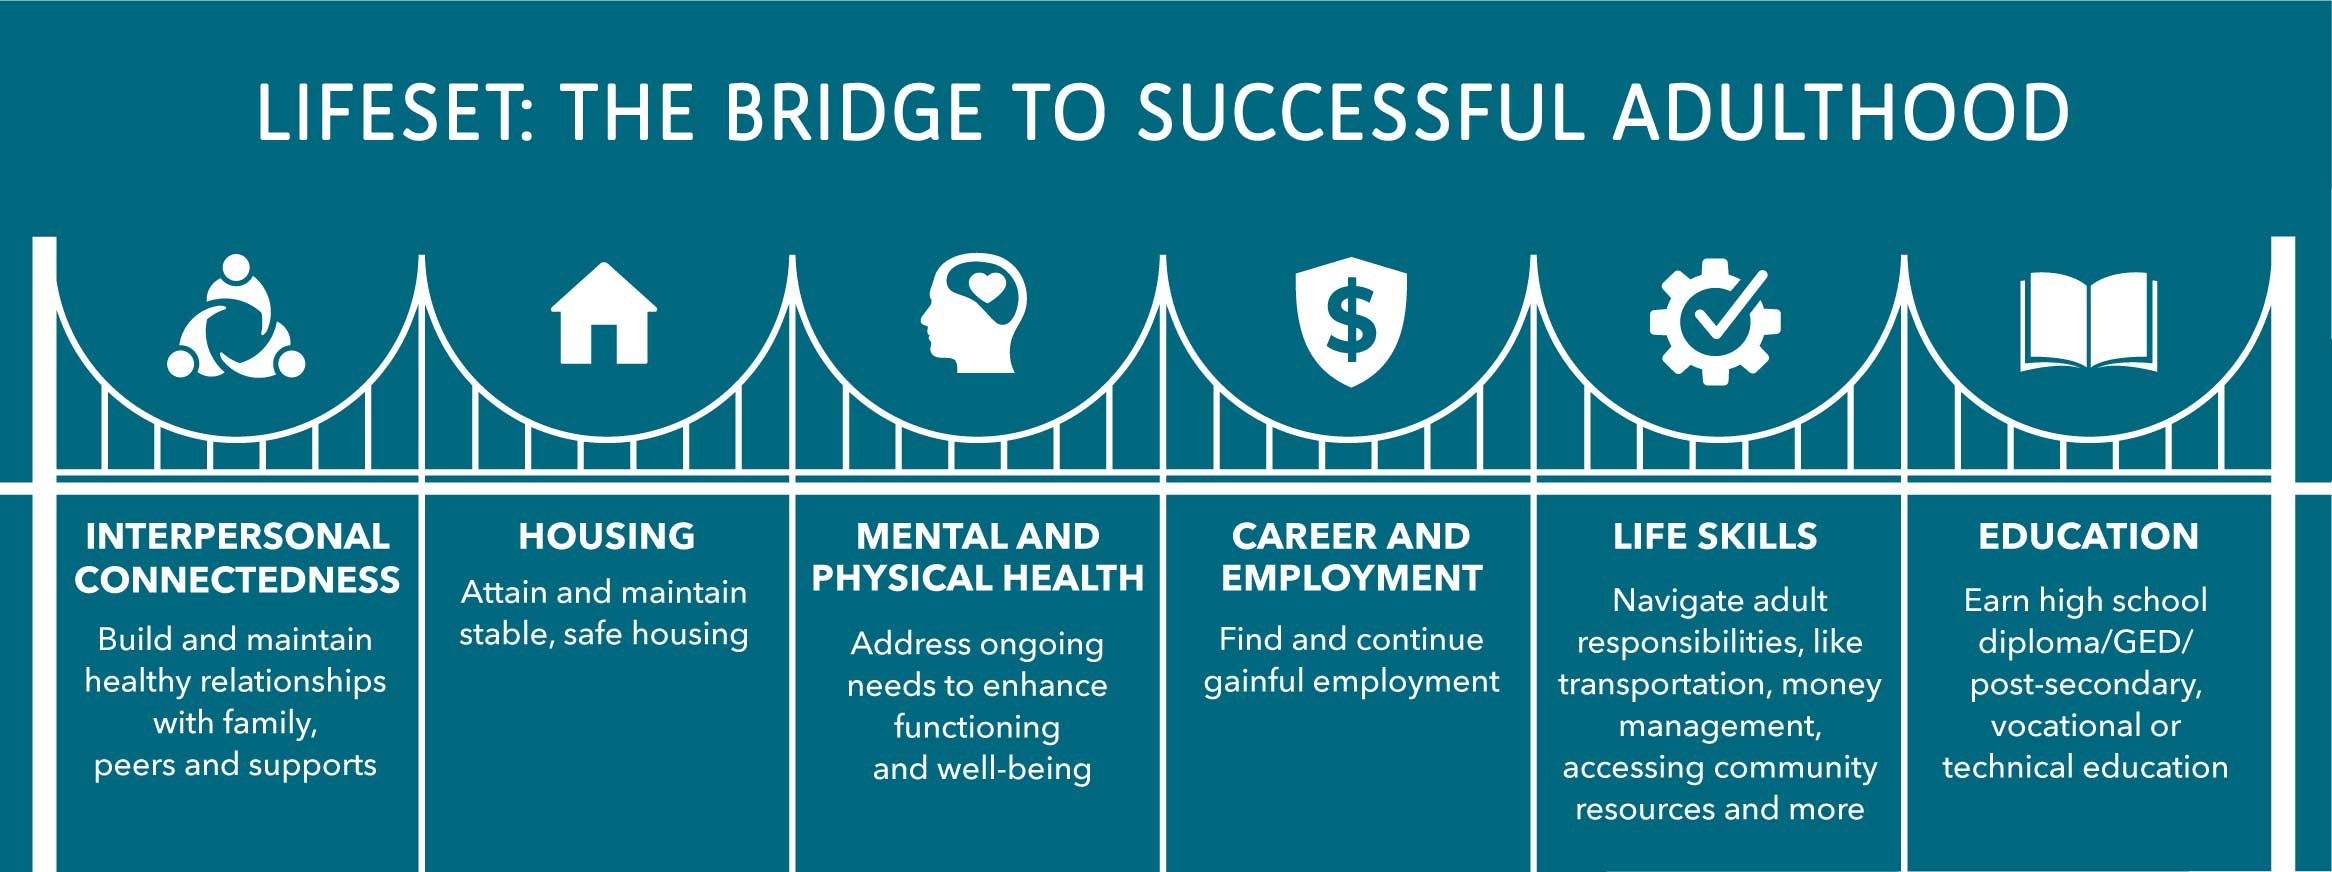 LifeSet: The bridge to successful adulthood infographic